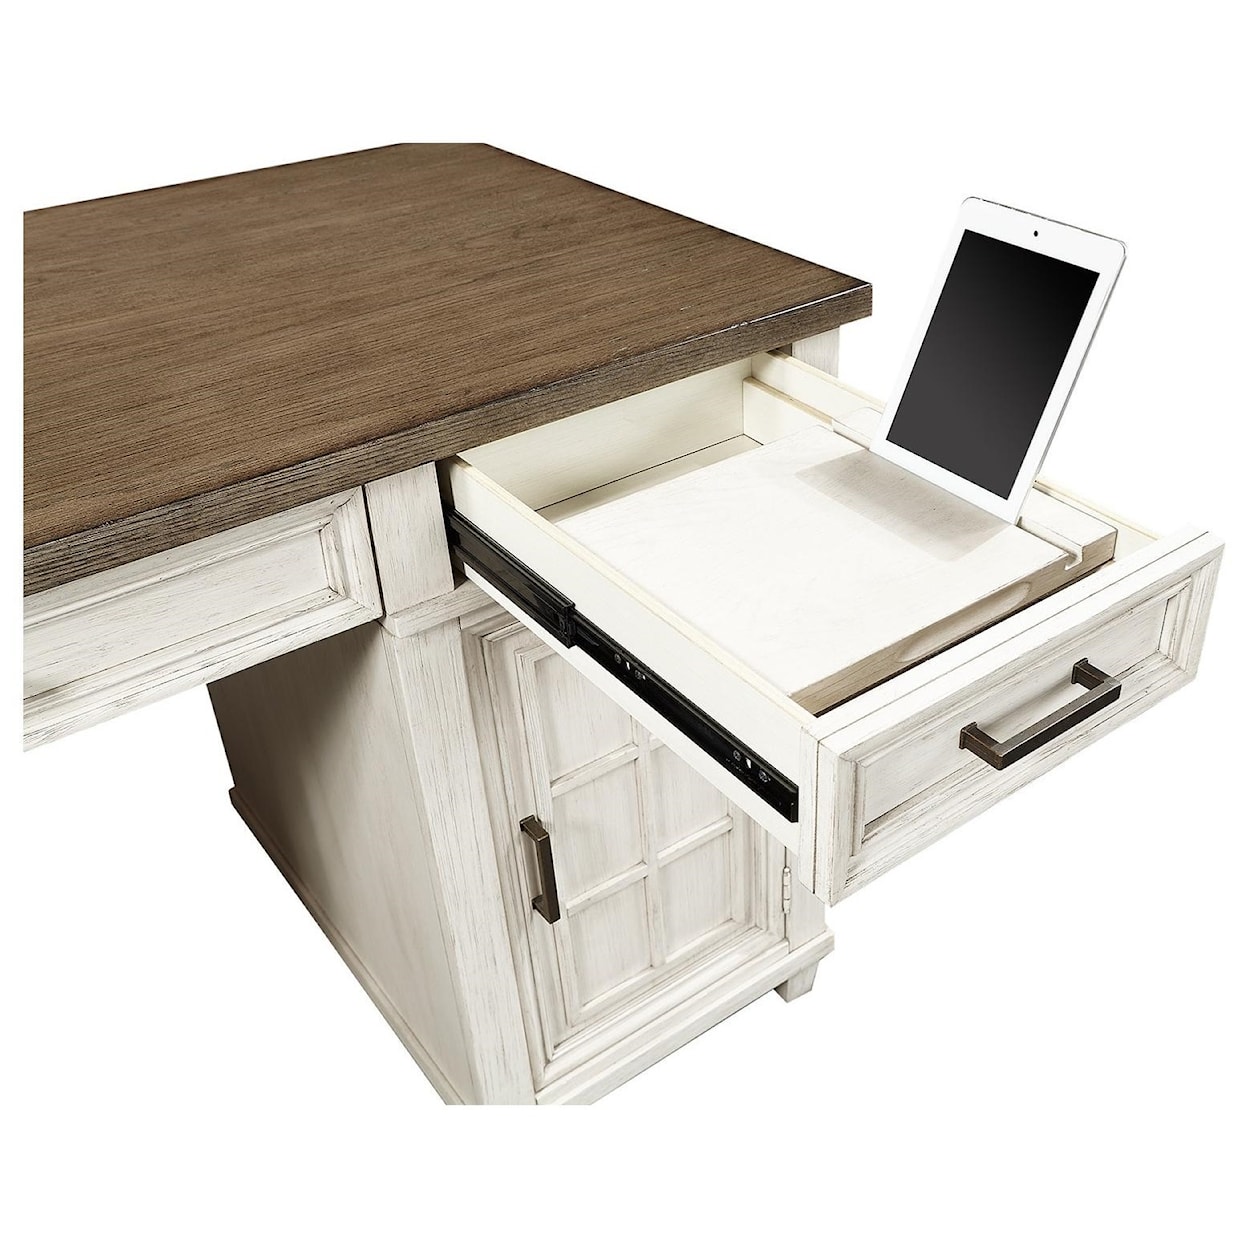 Aspenhome Caraway Counter Height Desk